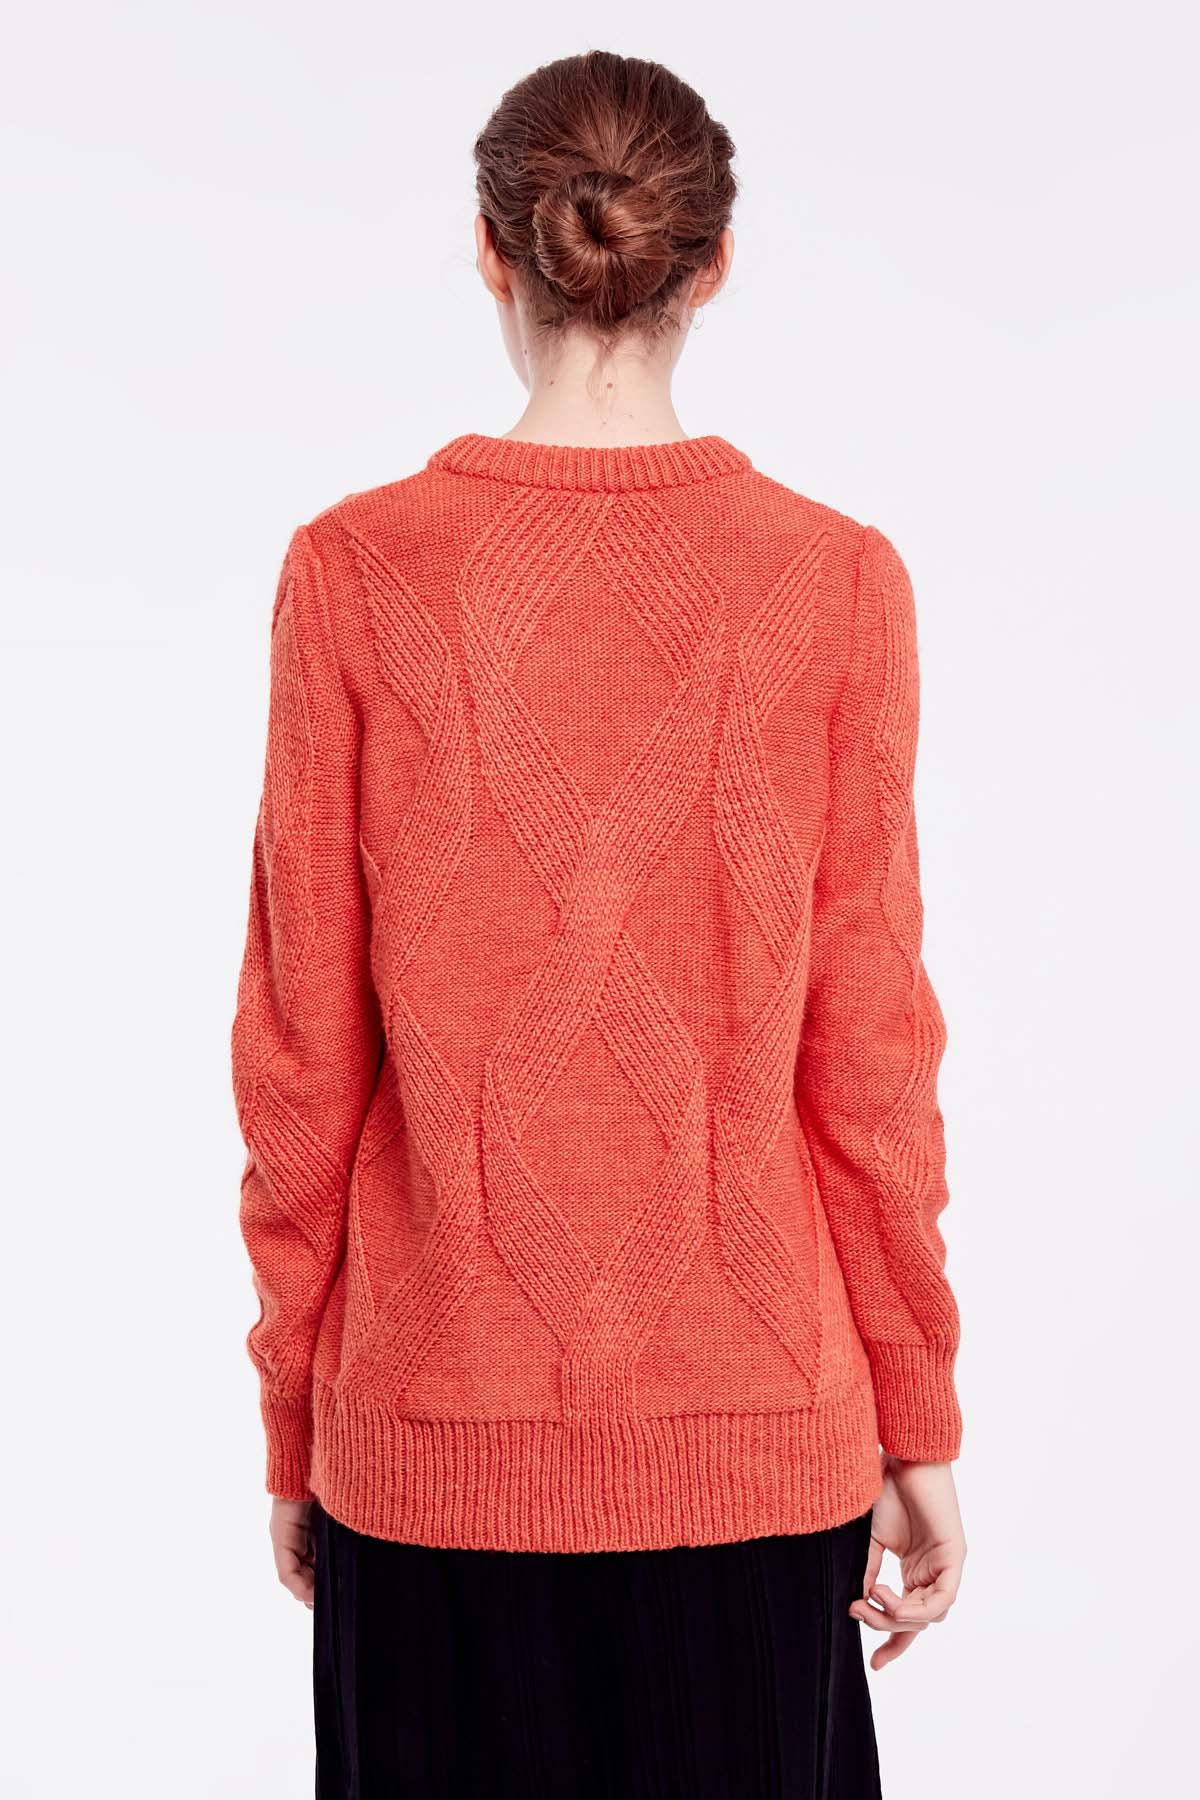 Orange free knit sweater, photo 5